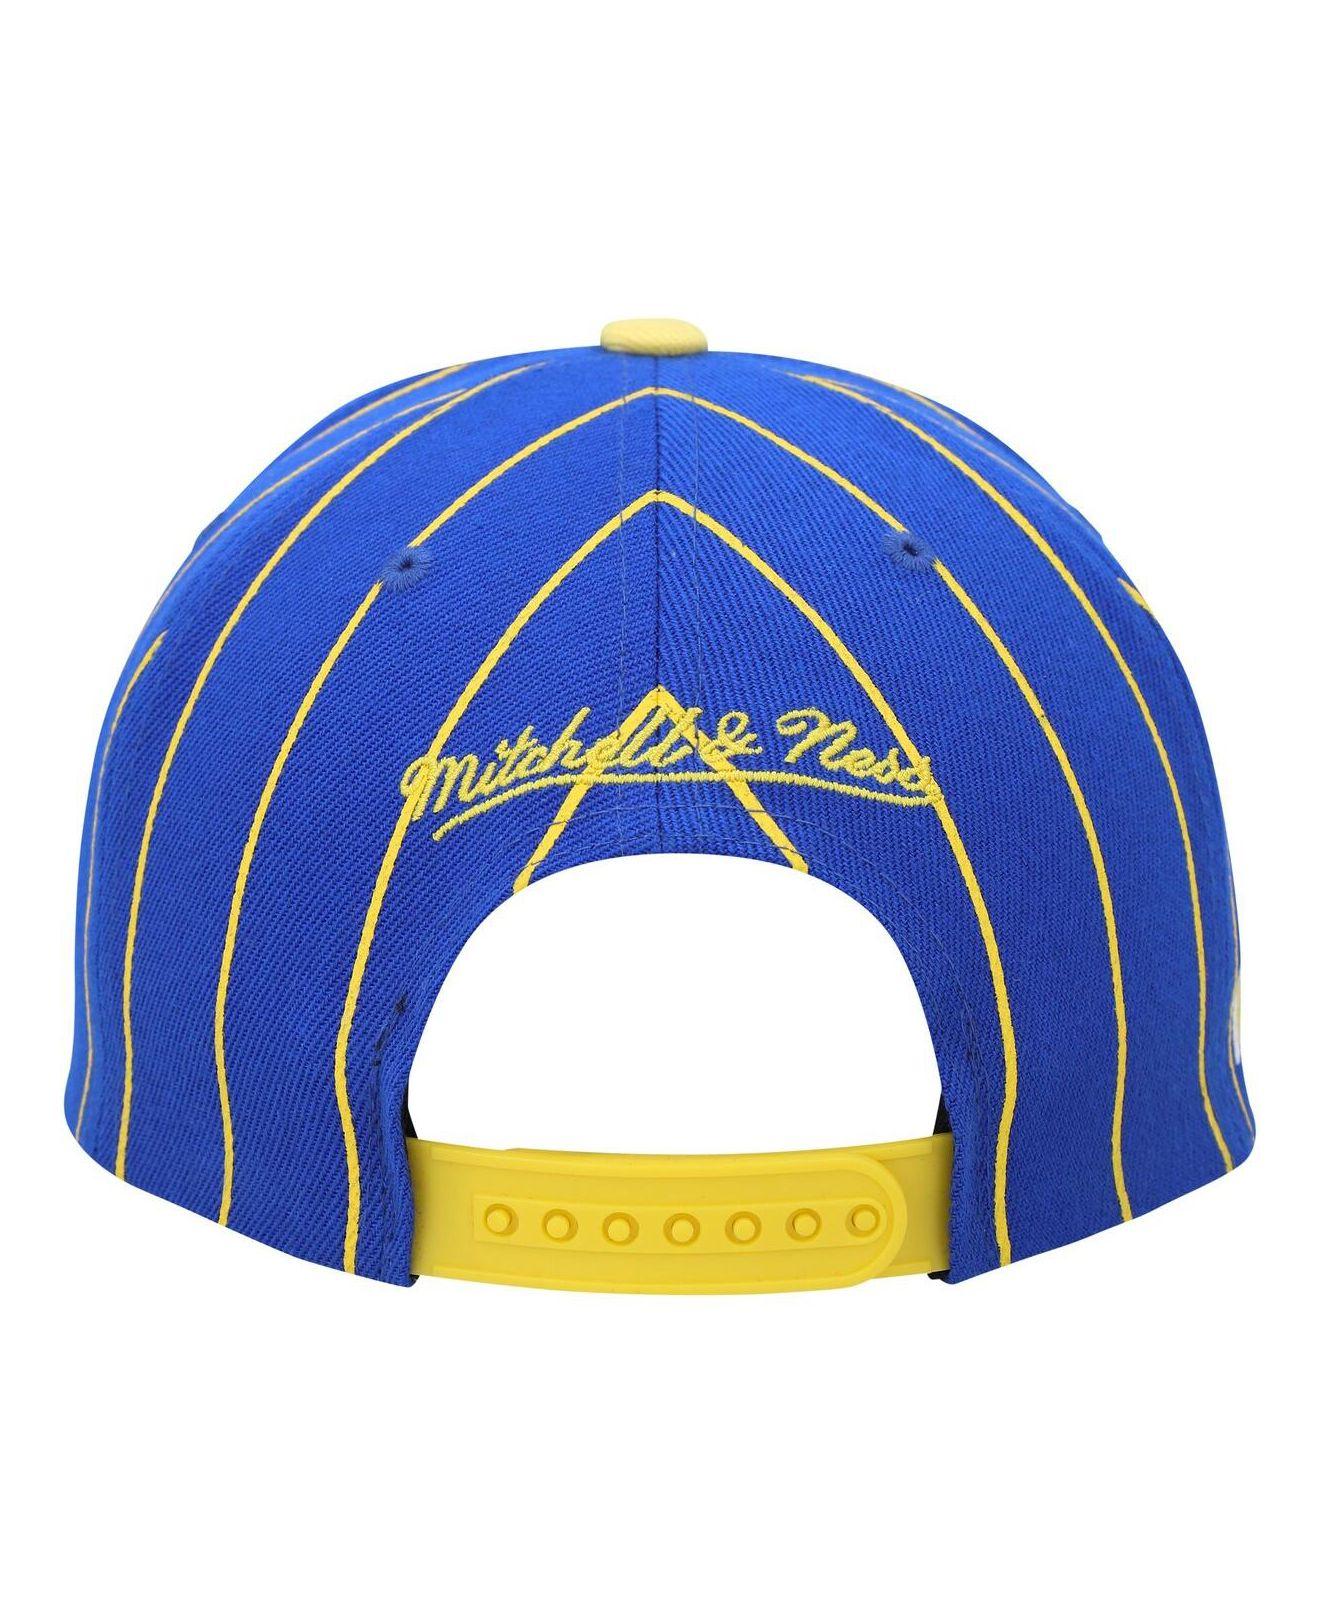 Men's Mitchell & Ness Royal Golden State Warriors Team Ground Snapback Hat